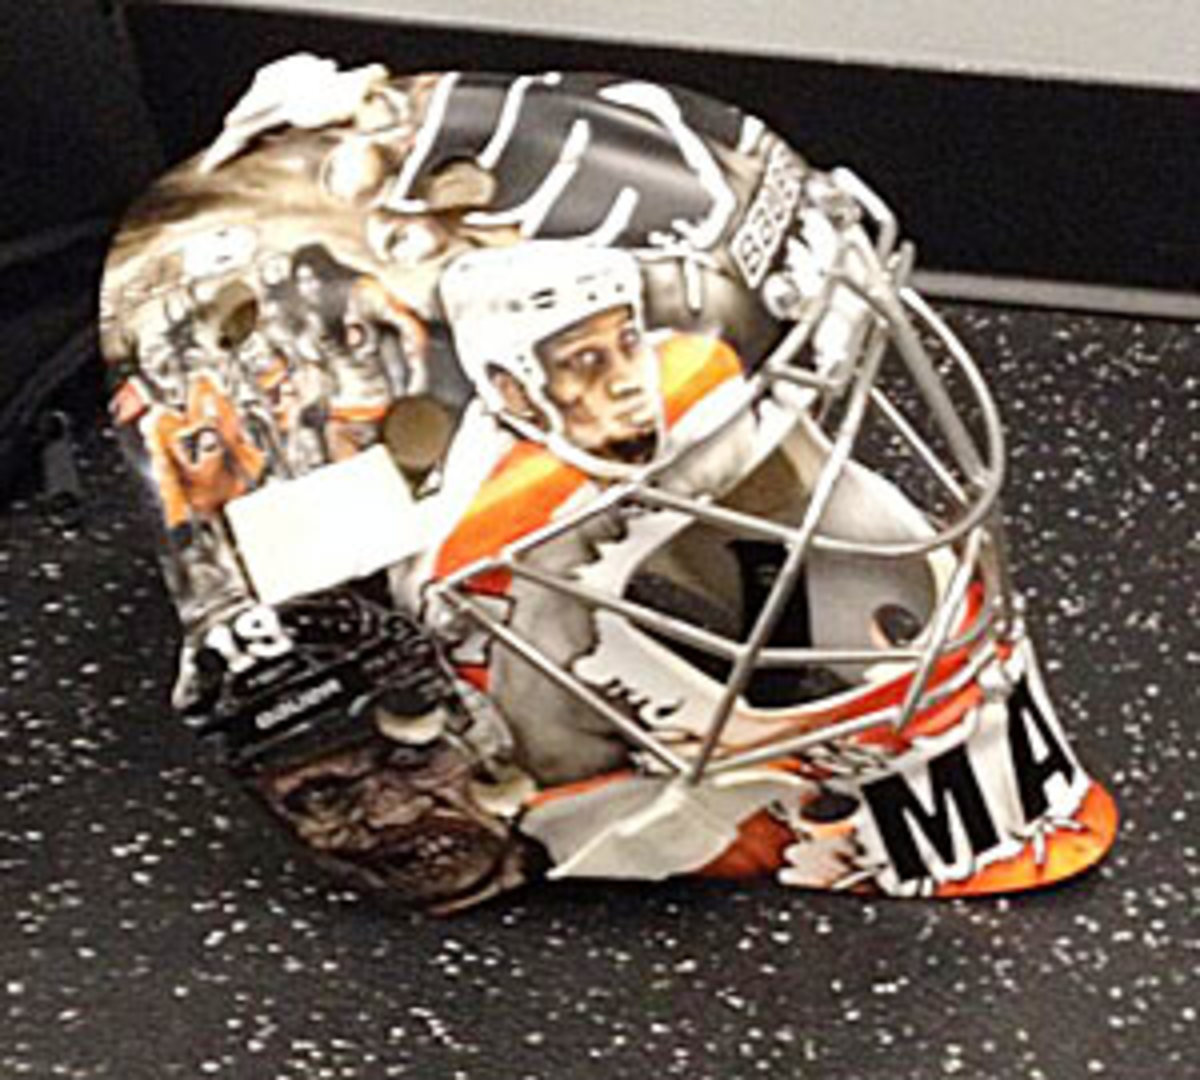 Steve Mason's new goalie mask has Zombie Wayne Simmonds on it.